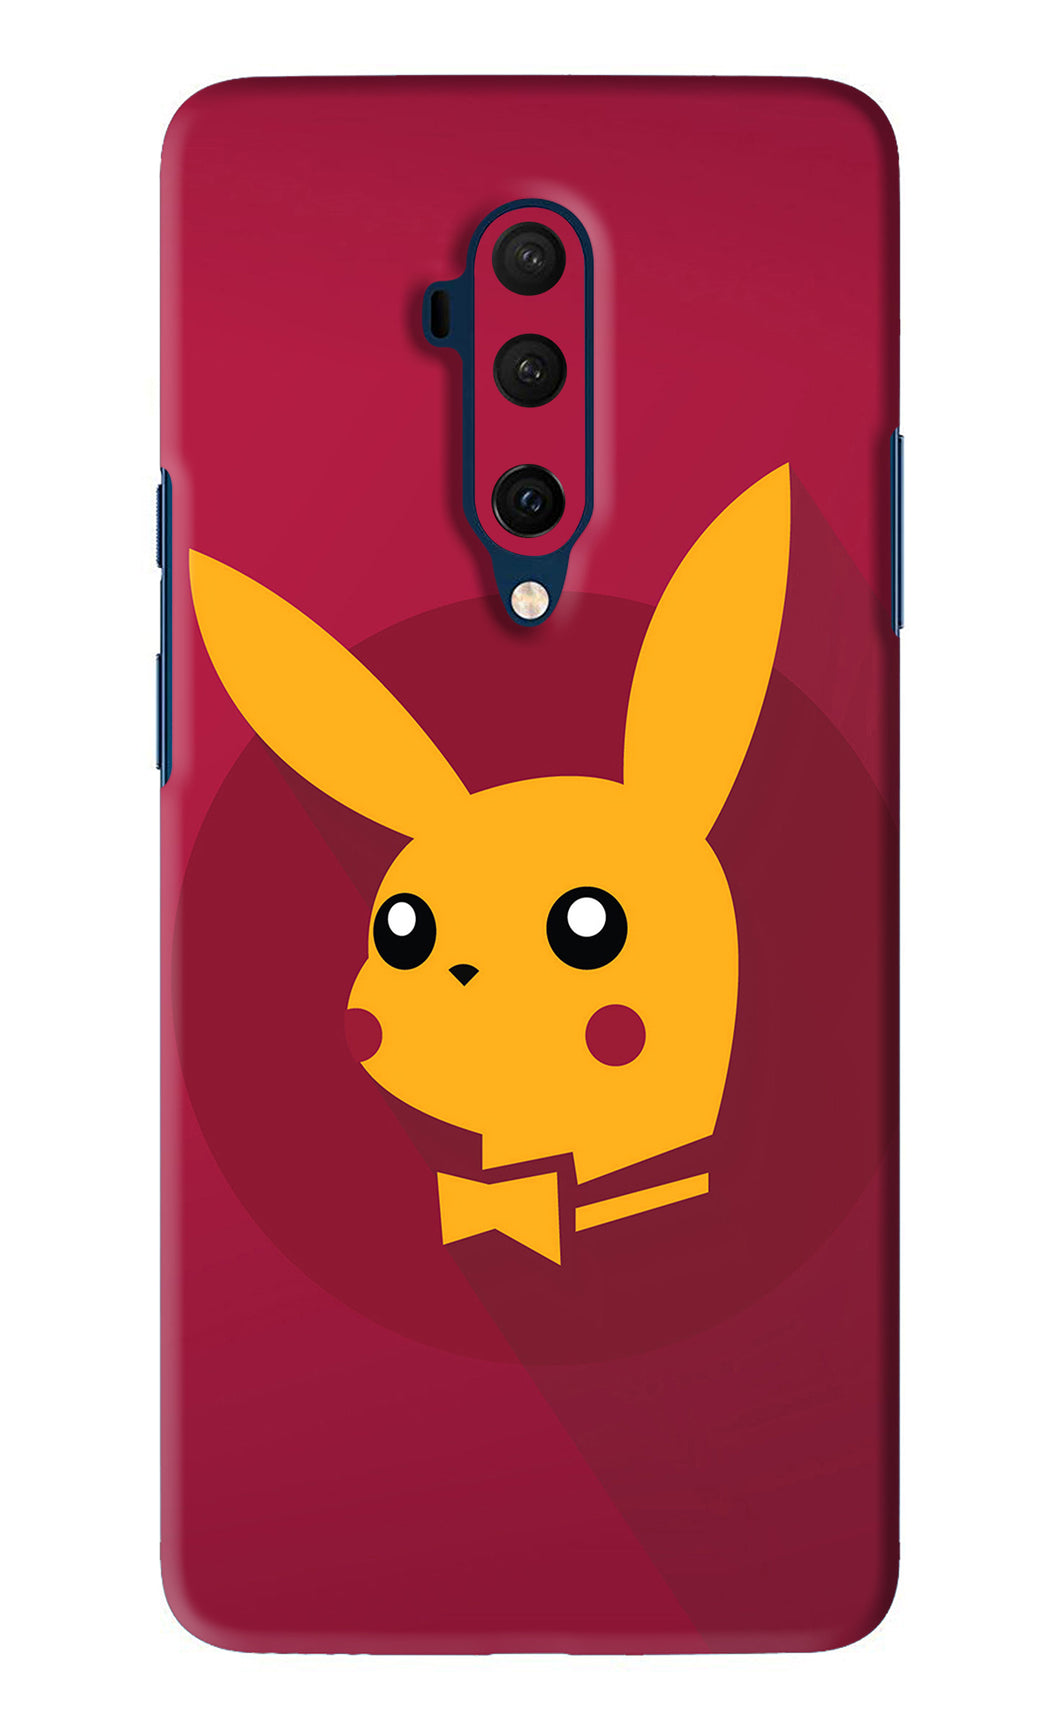 Pikachu OnePlus 7T Pro Back Skin Wrap